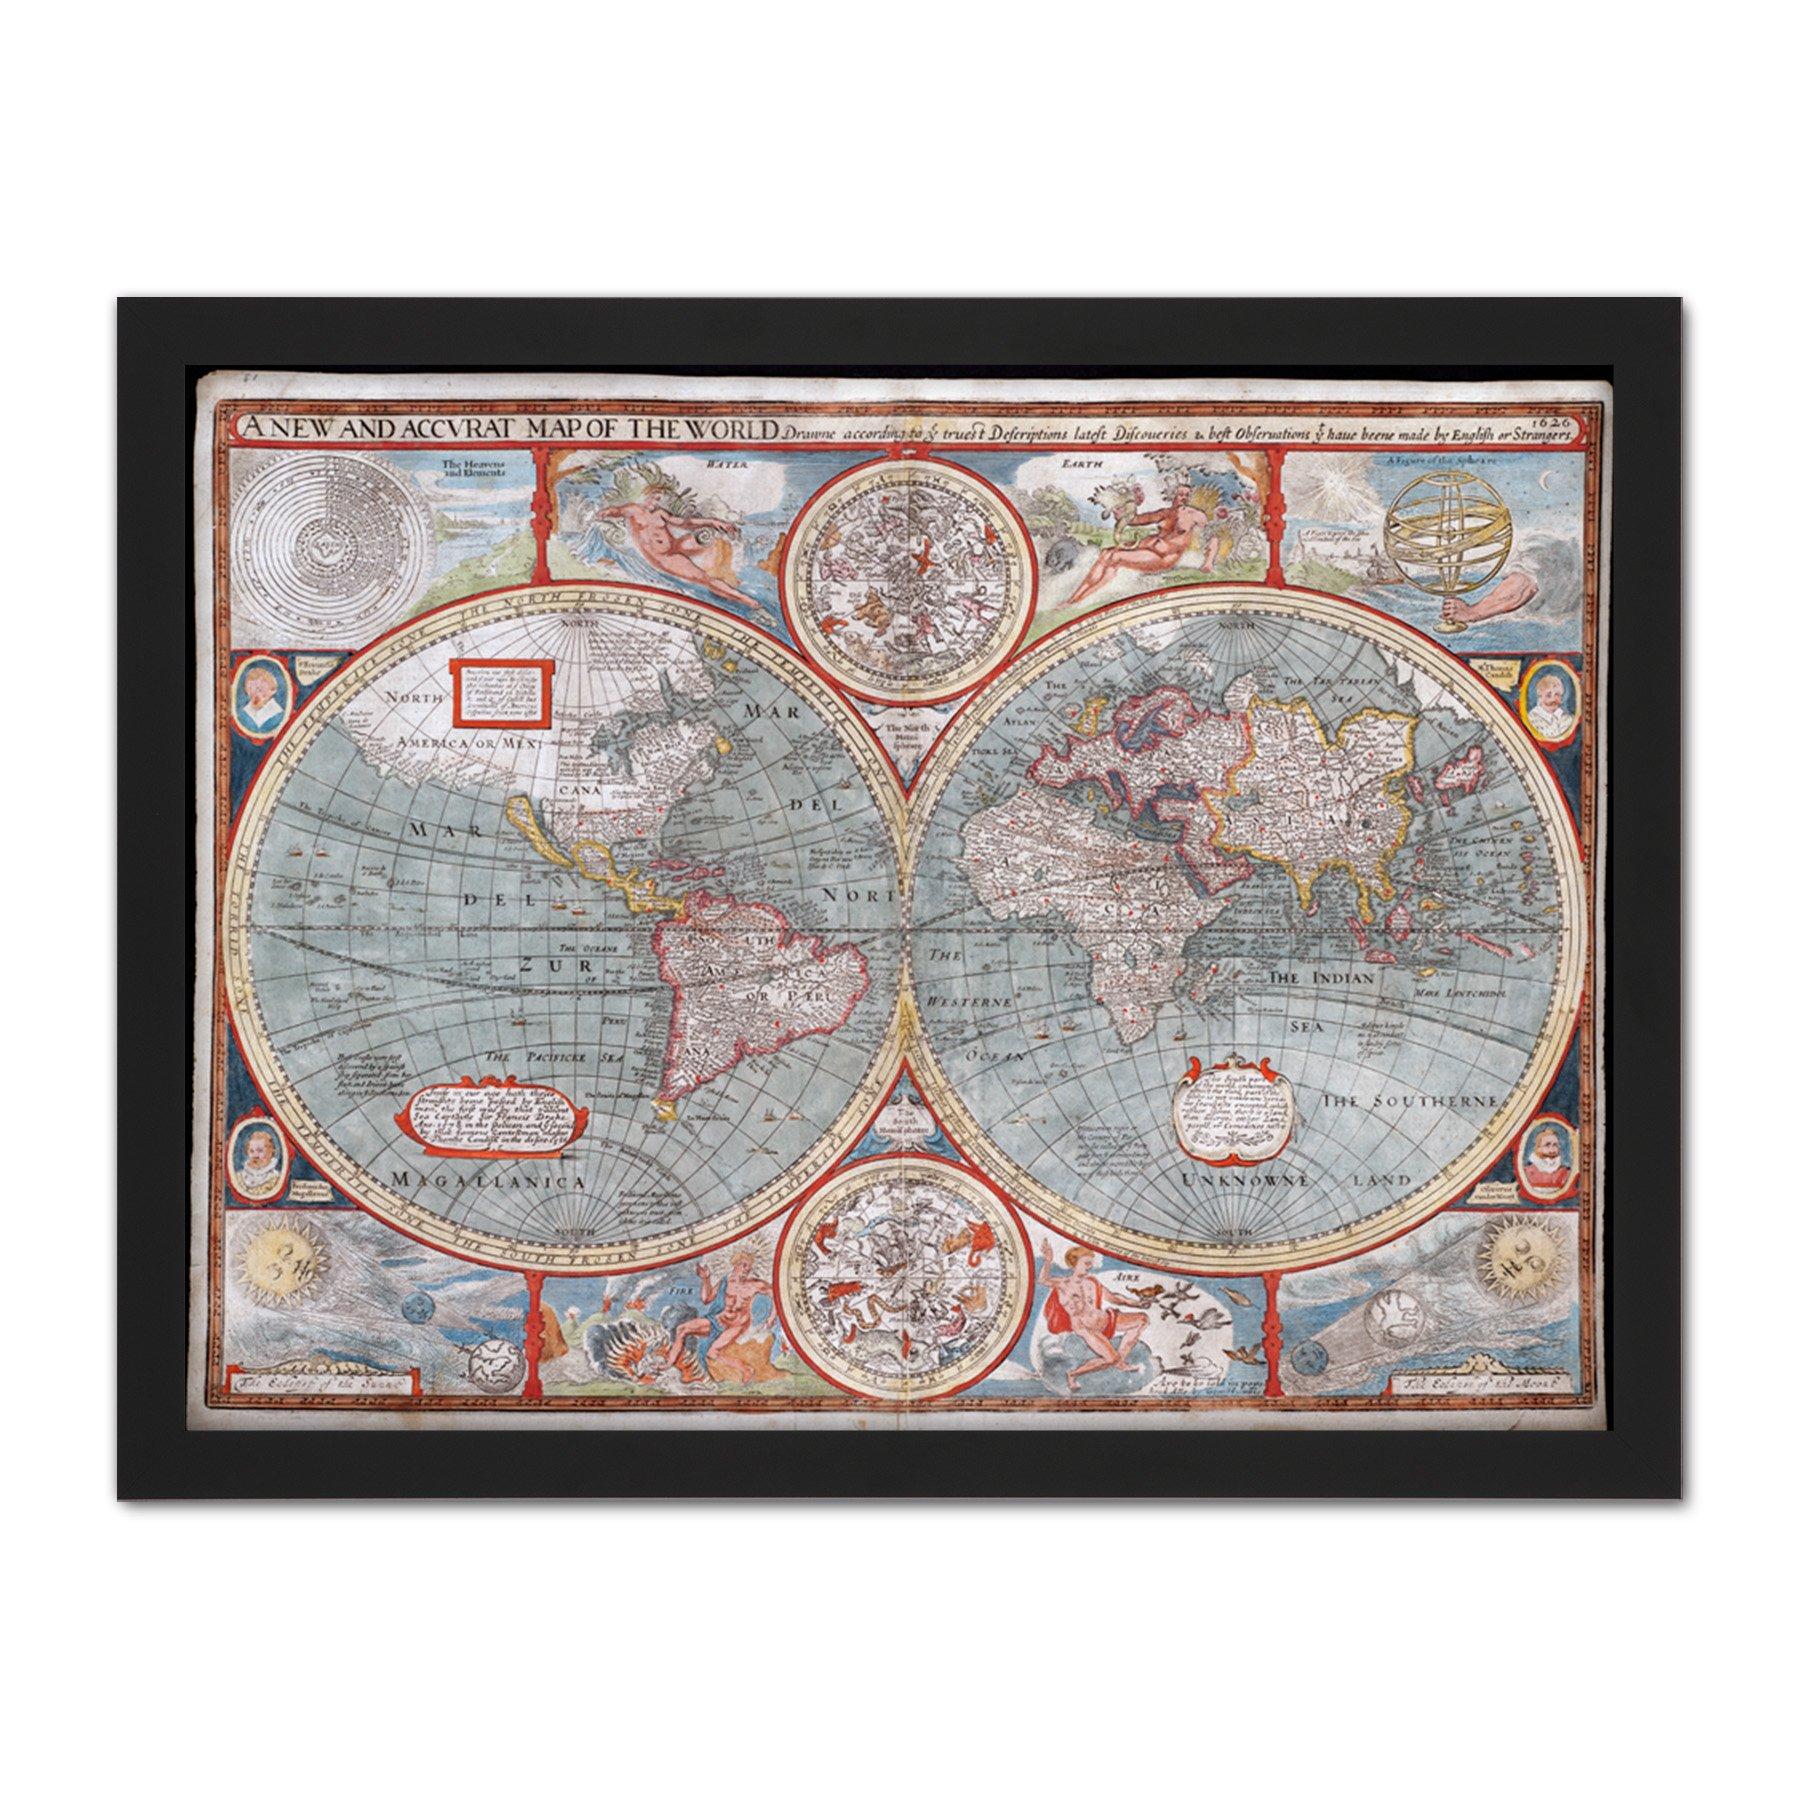 Speed 1626 Pictorial Map World Hemispheres Large Framed Wall Decor Art Print